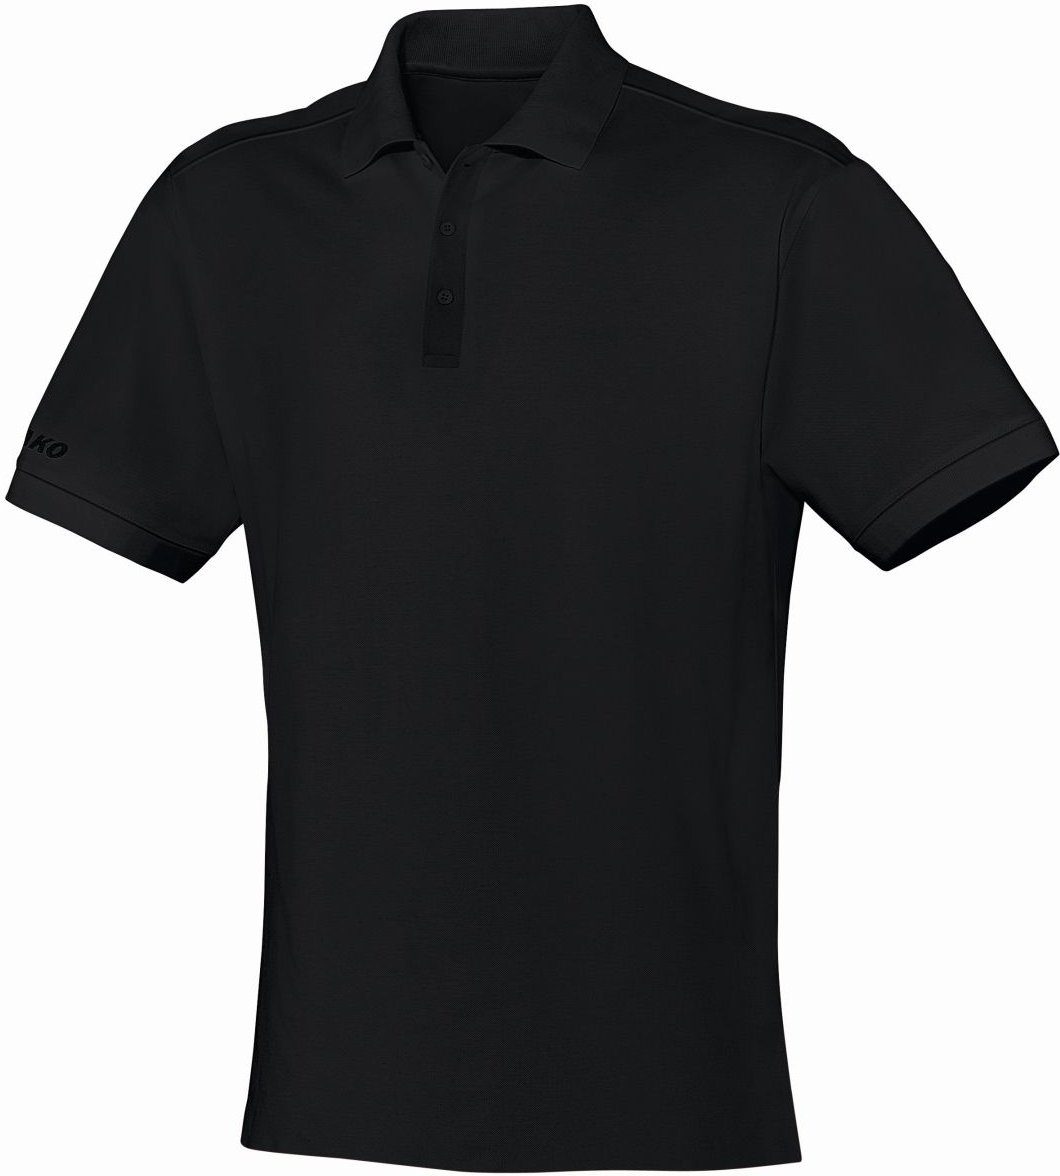 Jako Poloshirt Polo Classic m. Brusttasche schwarz/grau/weiss | Poloshirts